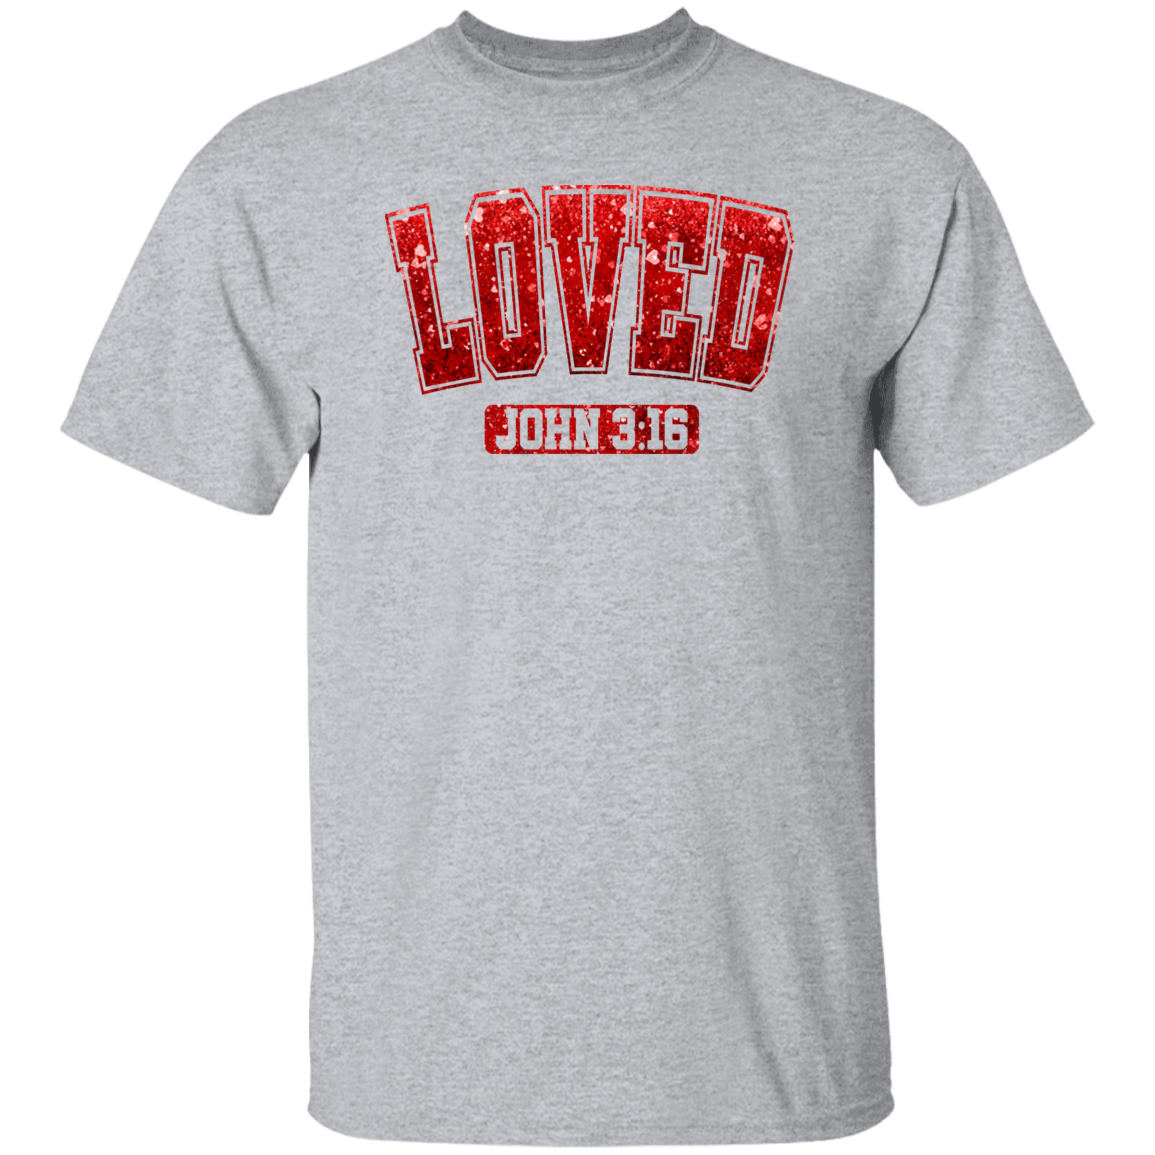 Loved 3:16 T-Shirt